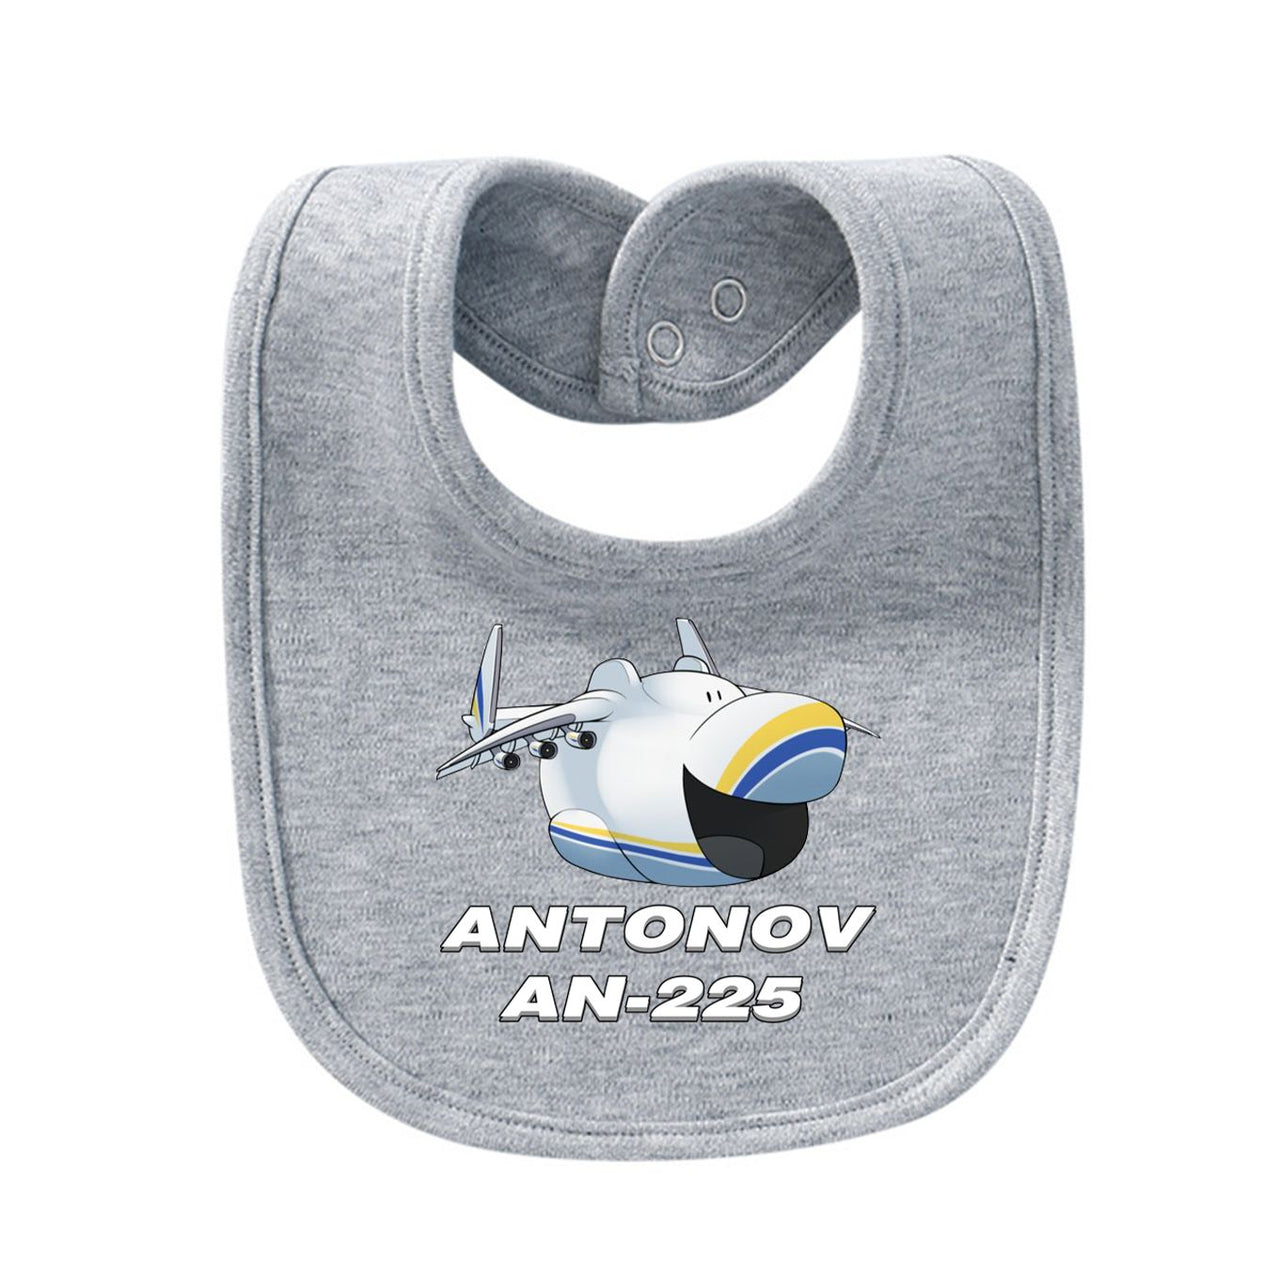 Antonov AN-225 (23) Designed Baby Saliva & Feeding Towels